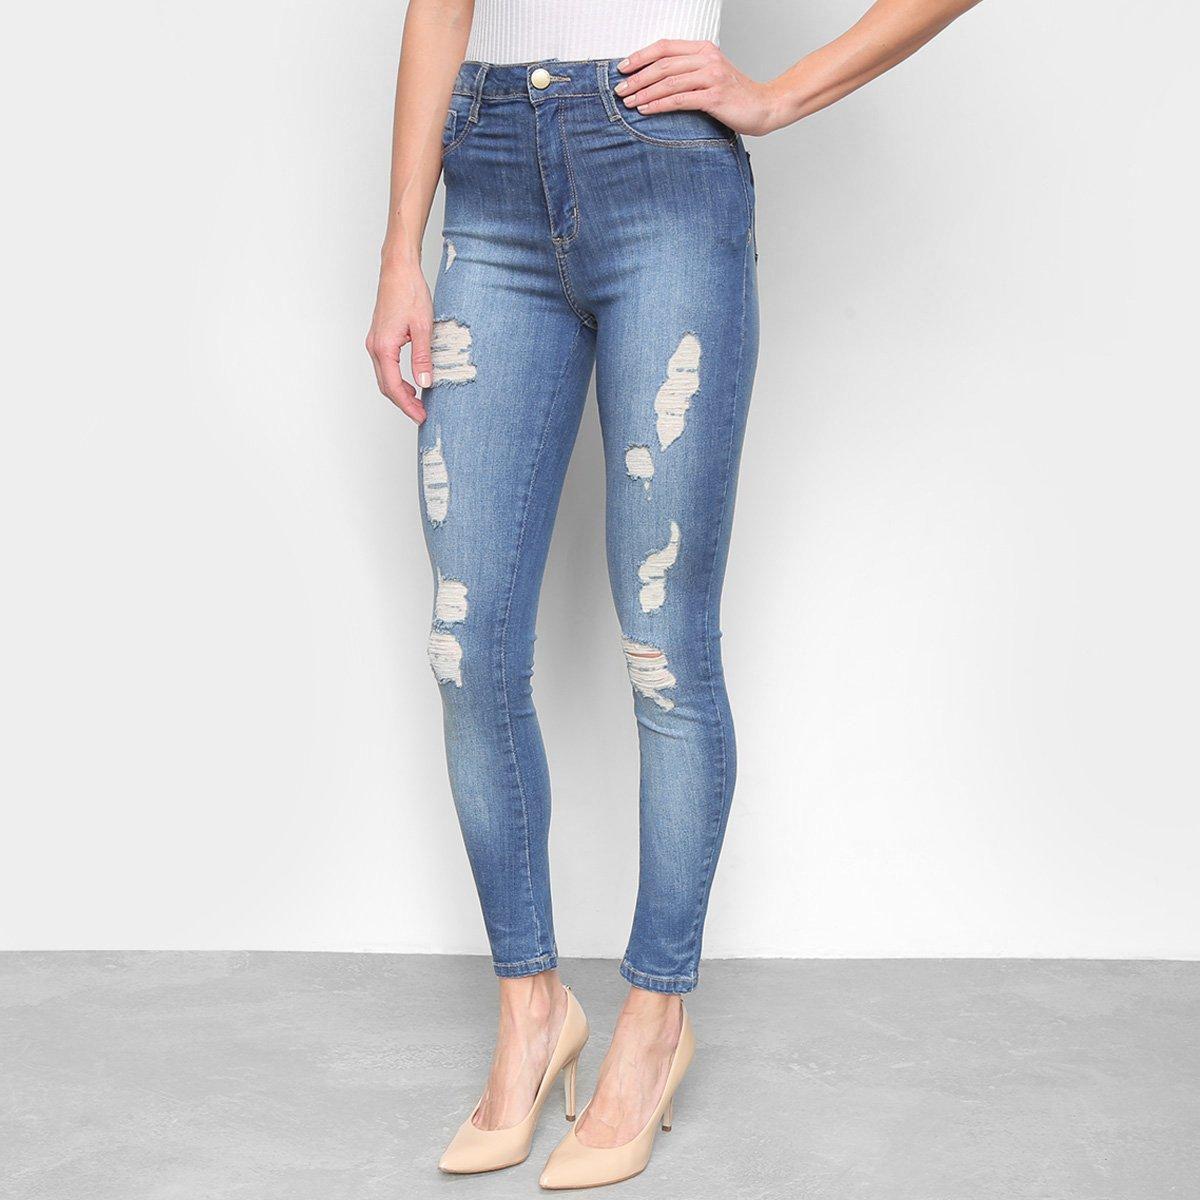 jeans sawary